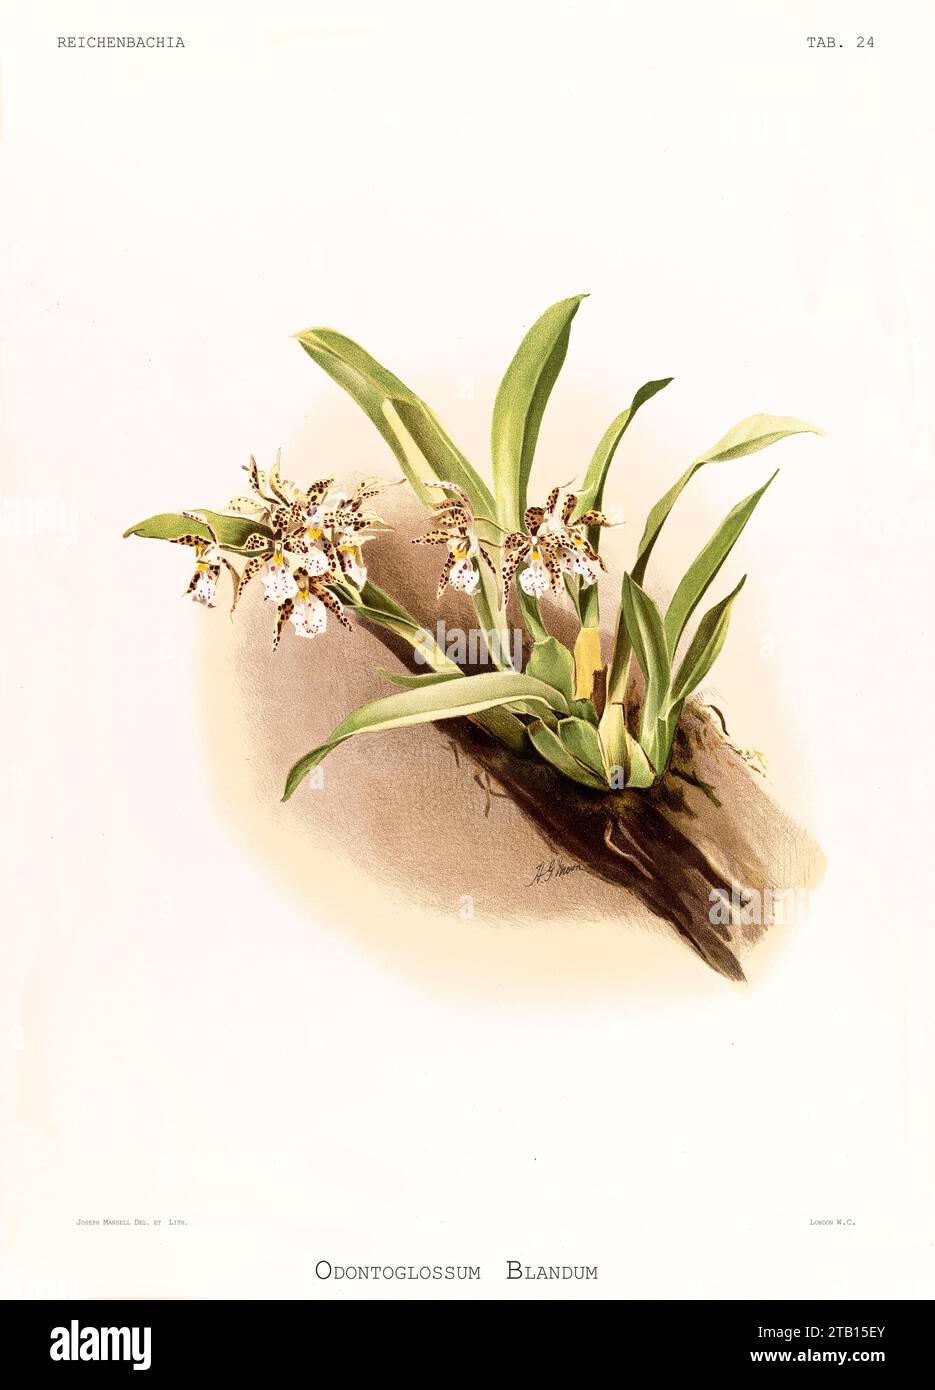 Old illustration of  Charming Odontoglossum (Odontoglossum blandum). Reichenbachia, by F. Sander. St. Albans, UK, 1888 - 1894 Stock Photo